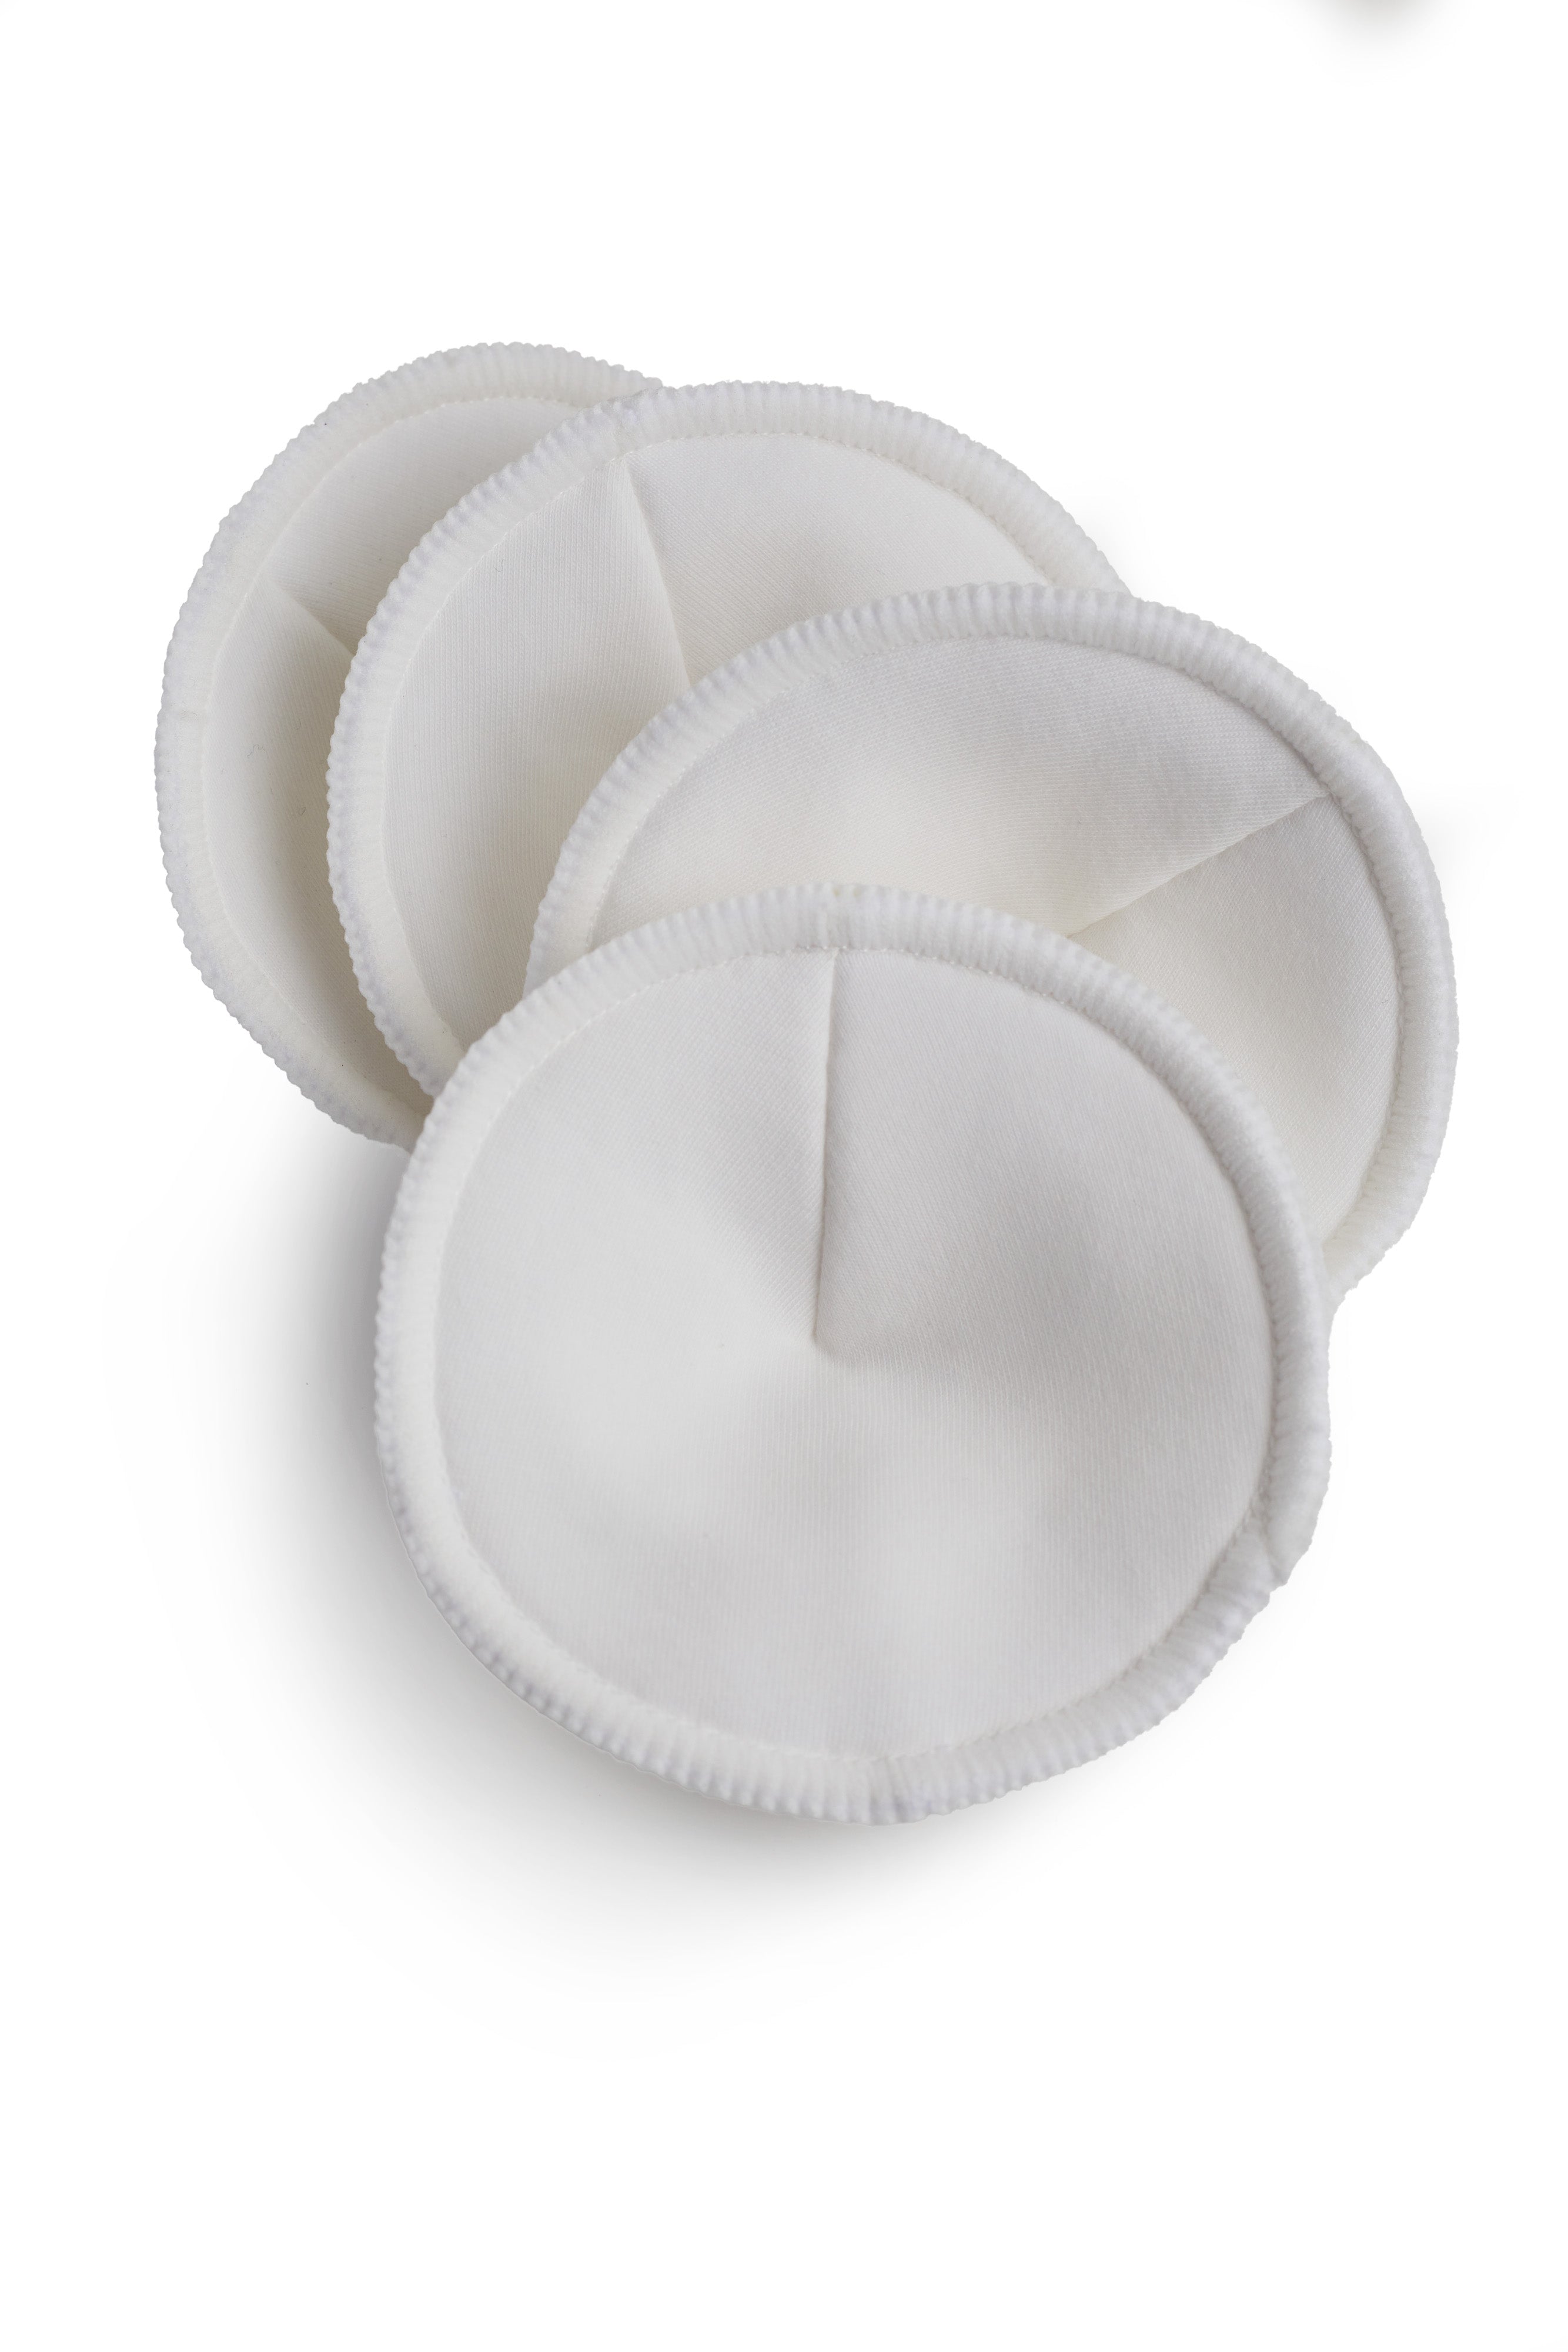 PureTree Organic Cotton Washable Nursing Breastfeeding Pads 4.5" (Pack of 10) - PureTree